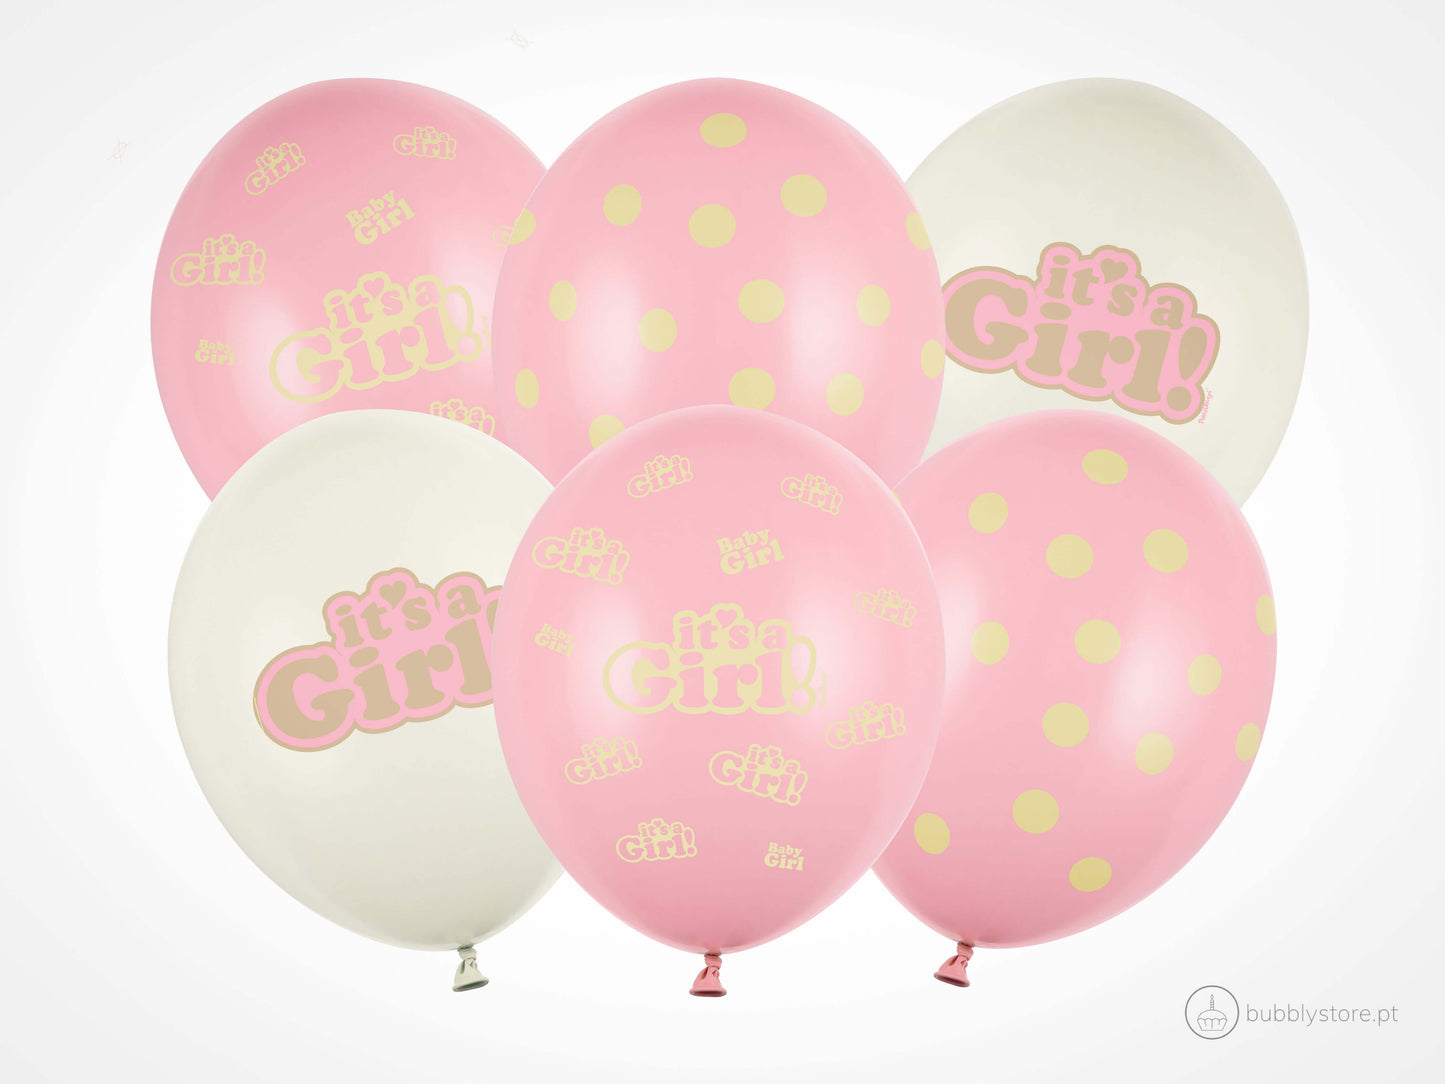 It's a Girl Balloons